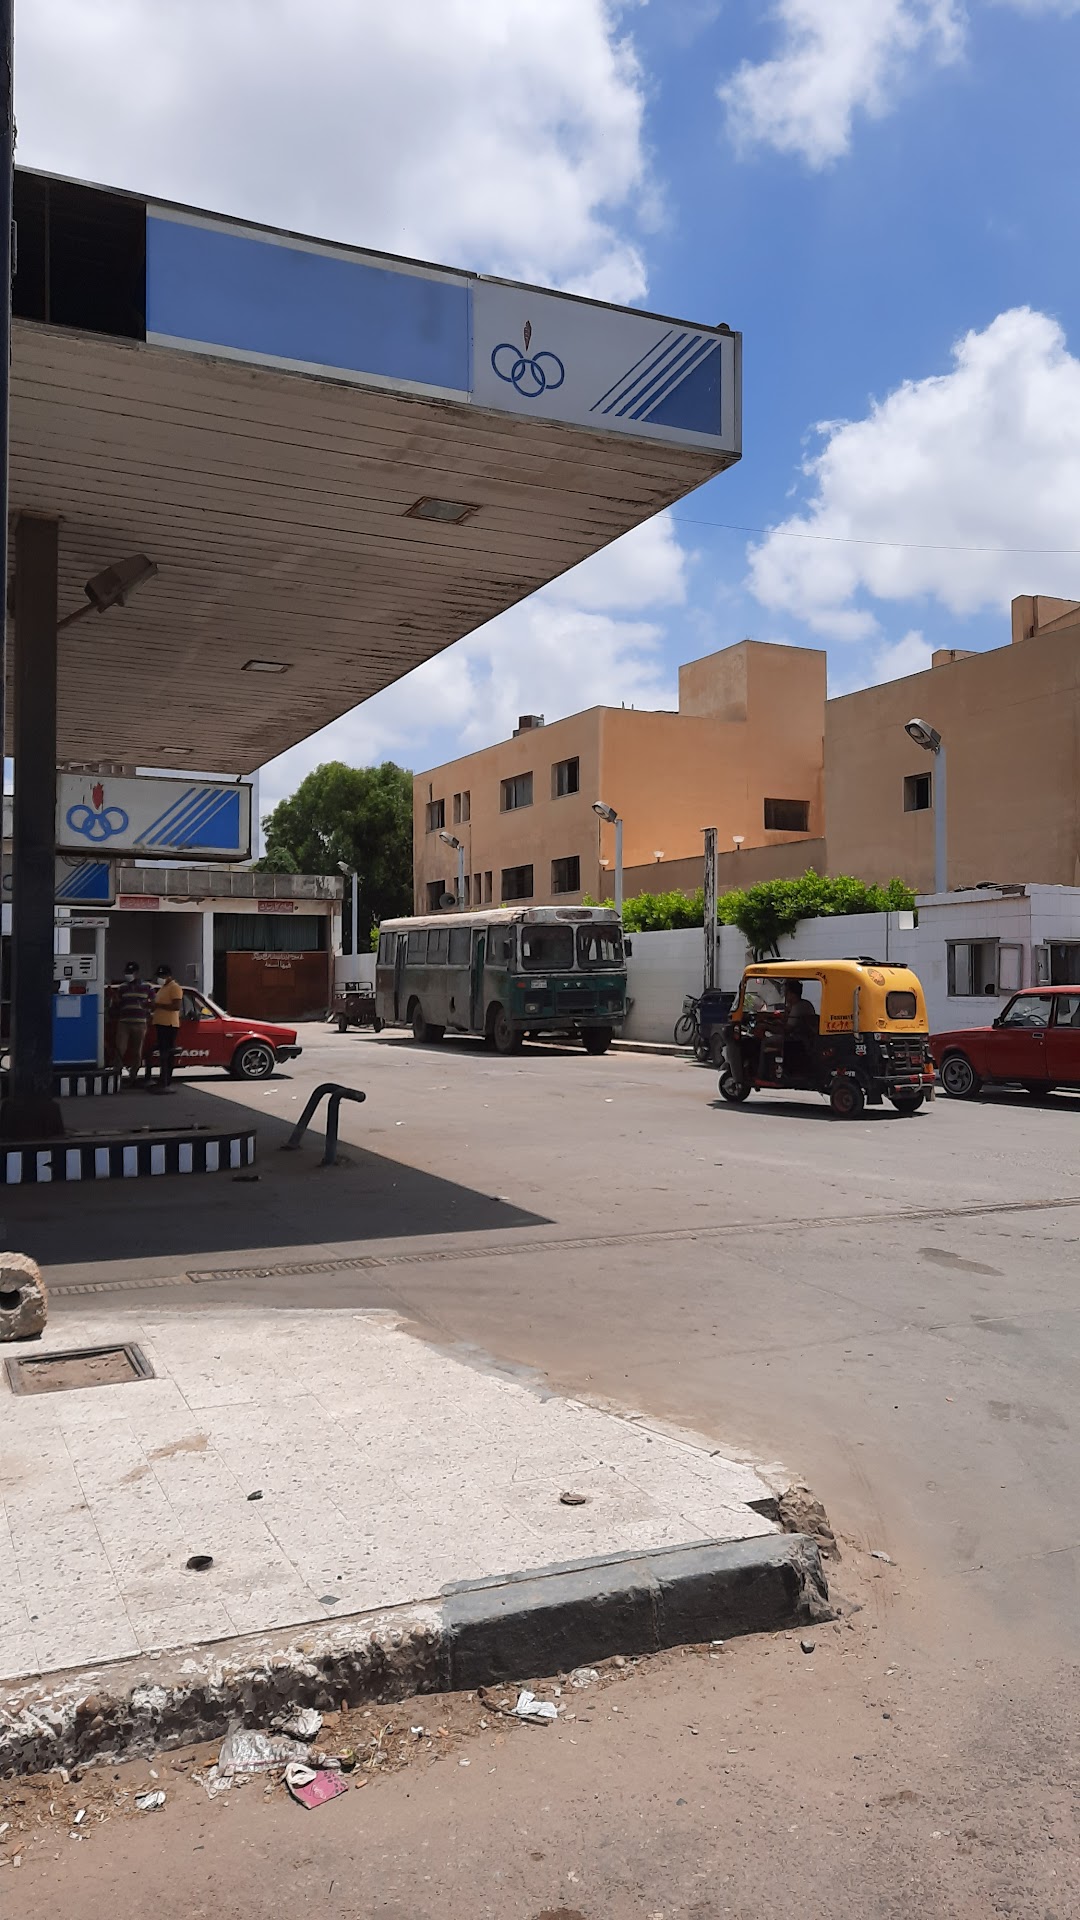 Cooperative petrol station